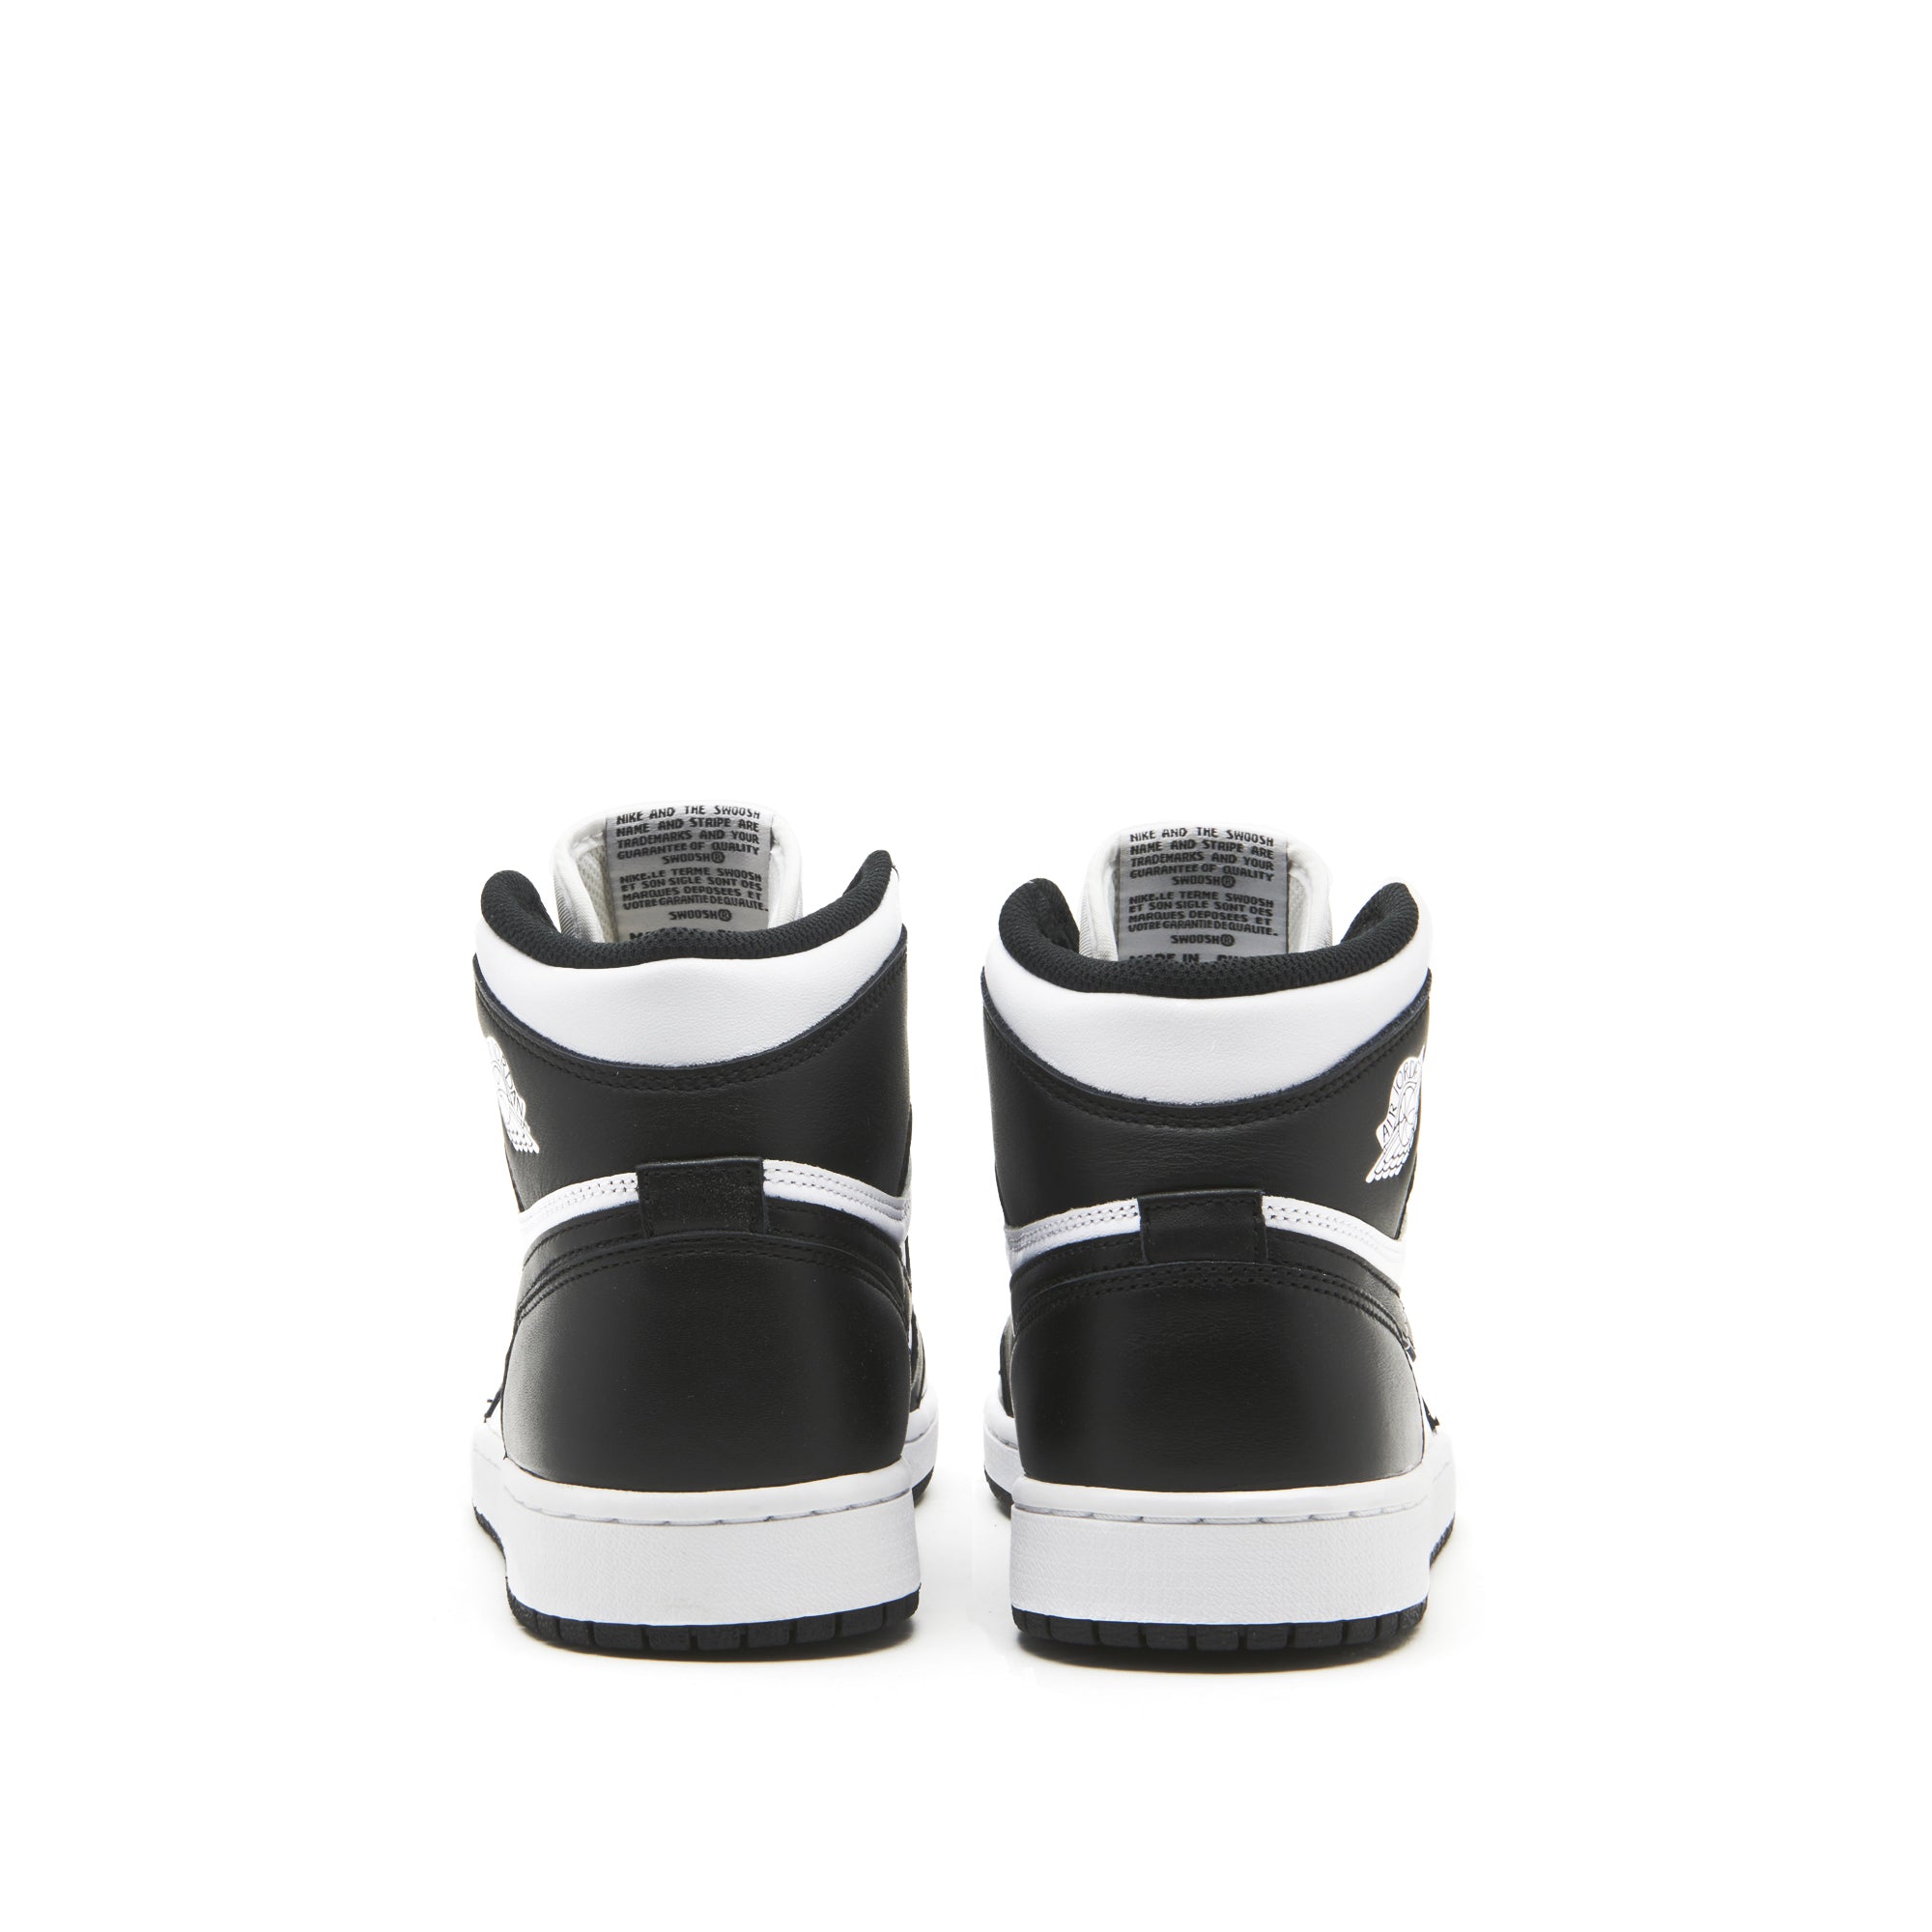 Jordan 1 Retro Black White (2014) Men's - 555088-010 - US